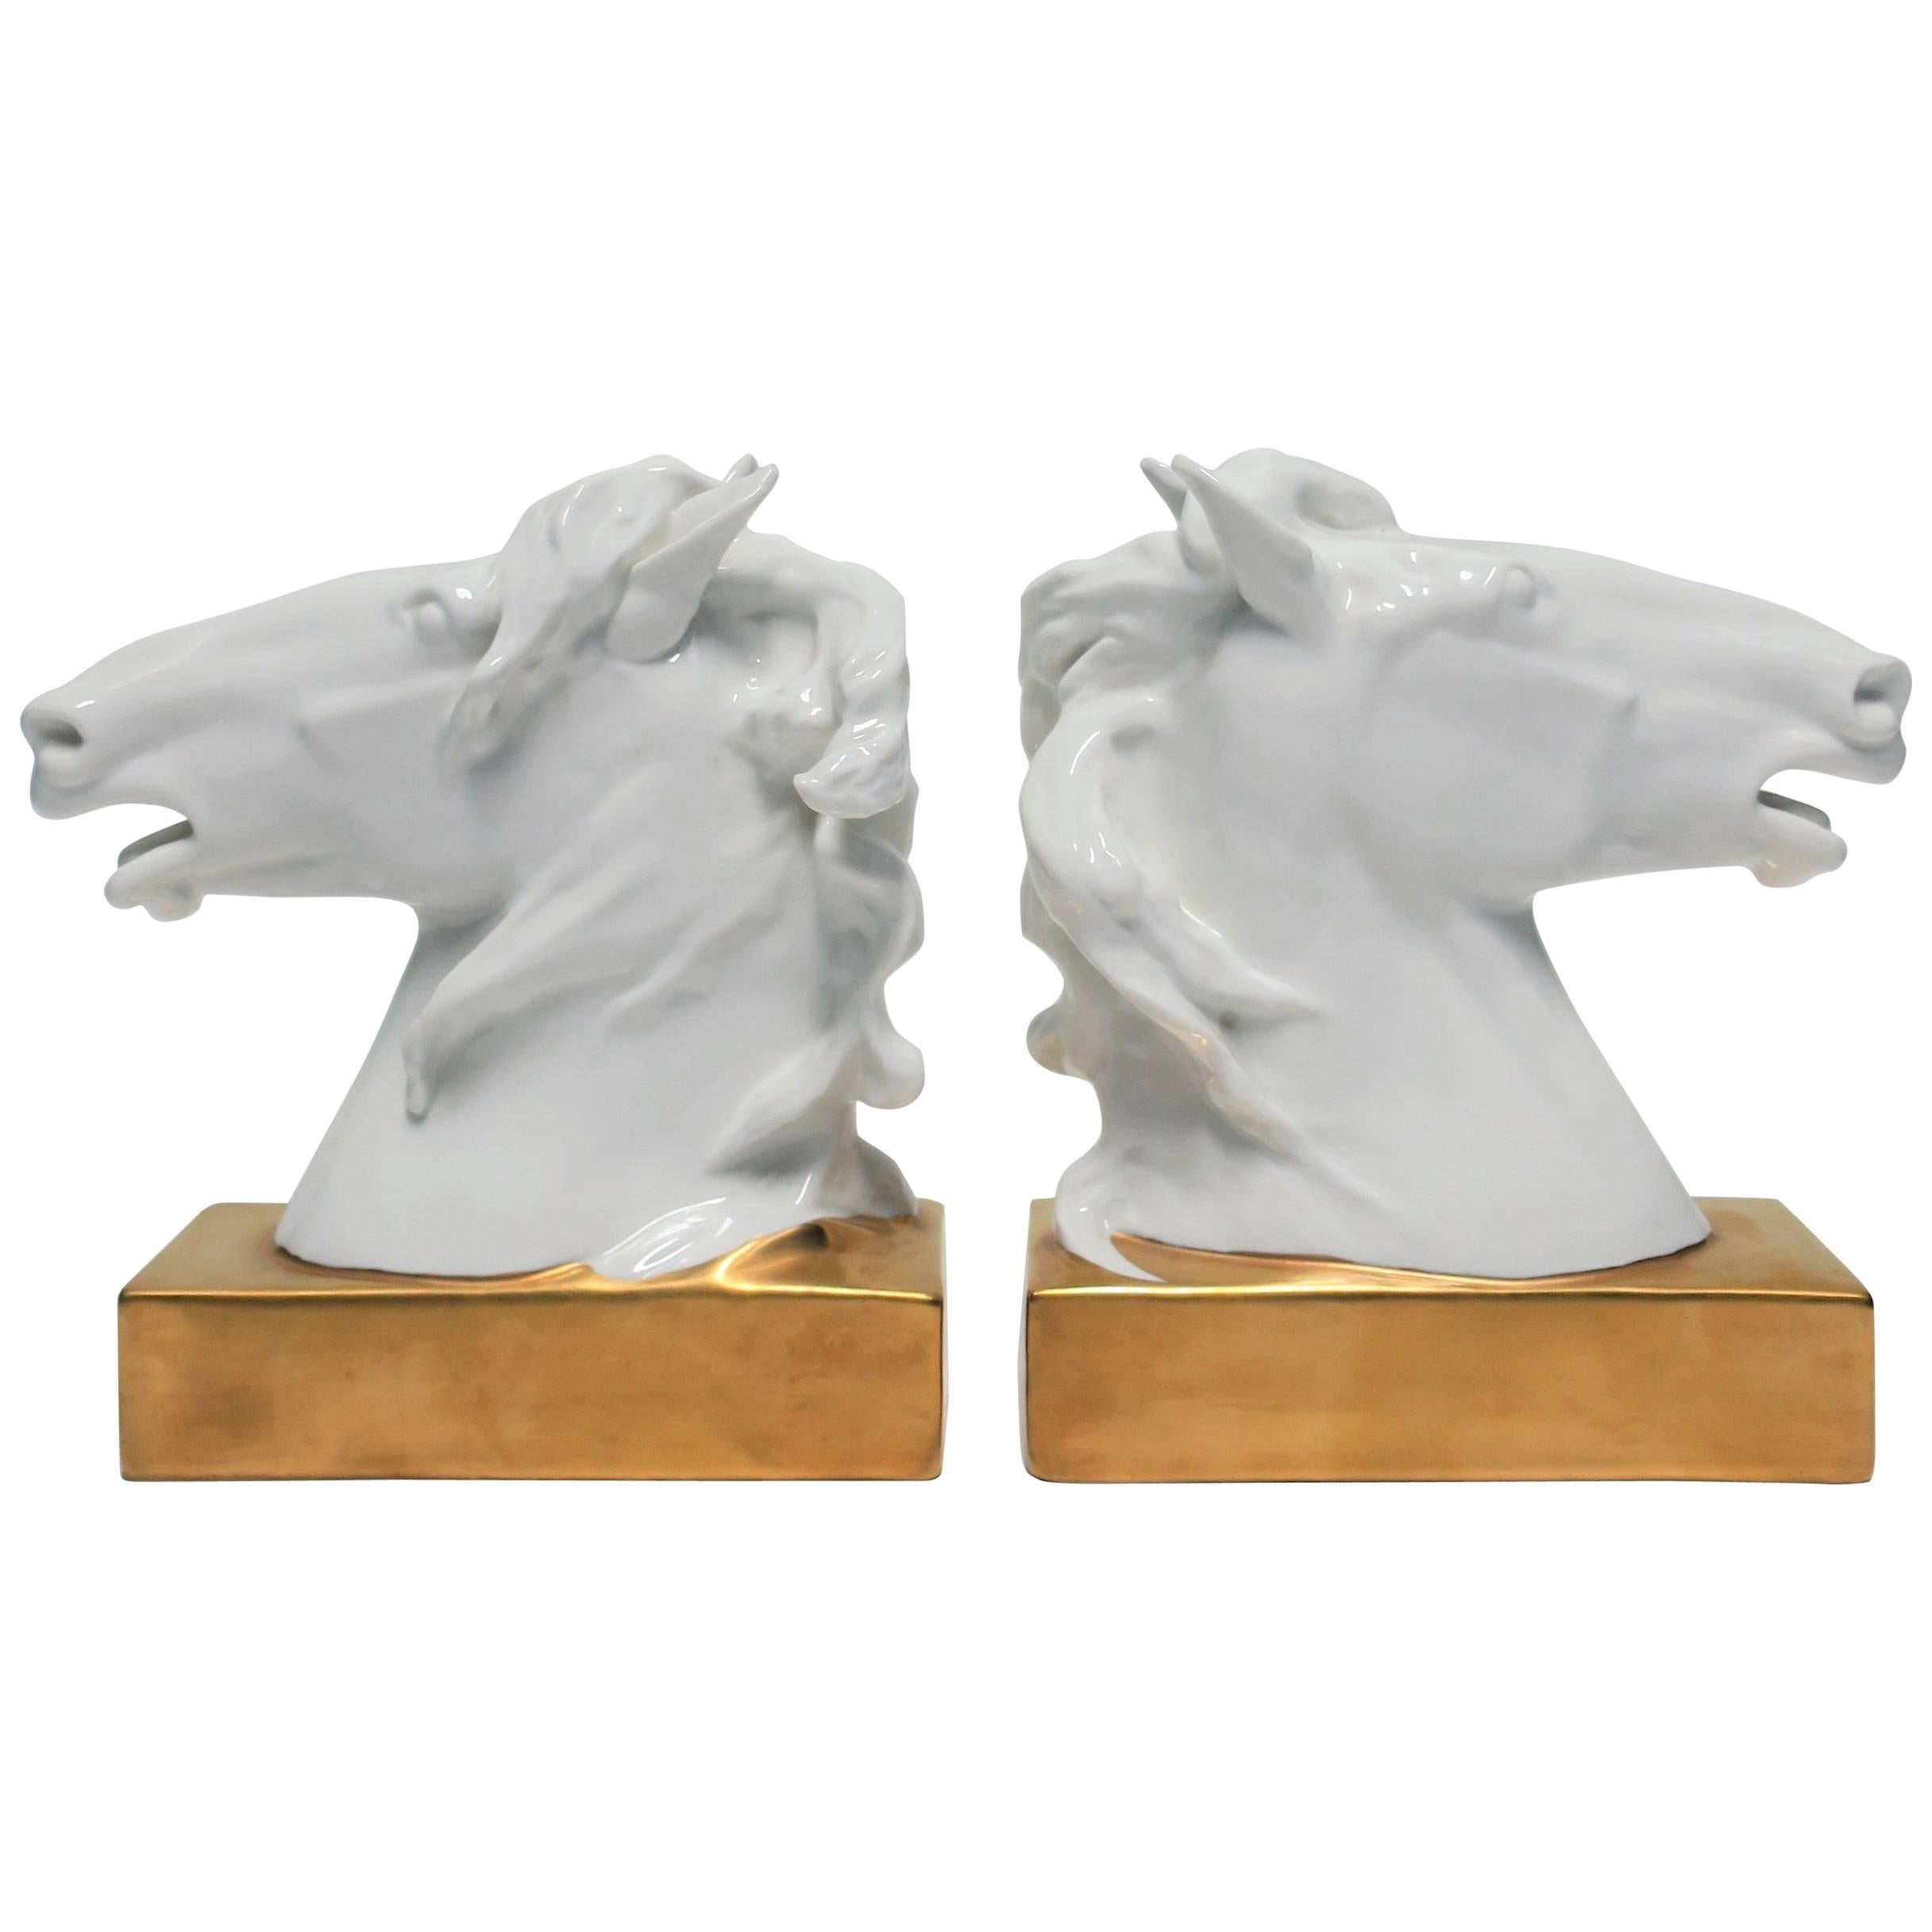 Porcelain Horse Equine Bookends or Decorative Object Sculptures European